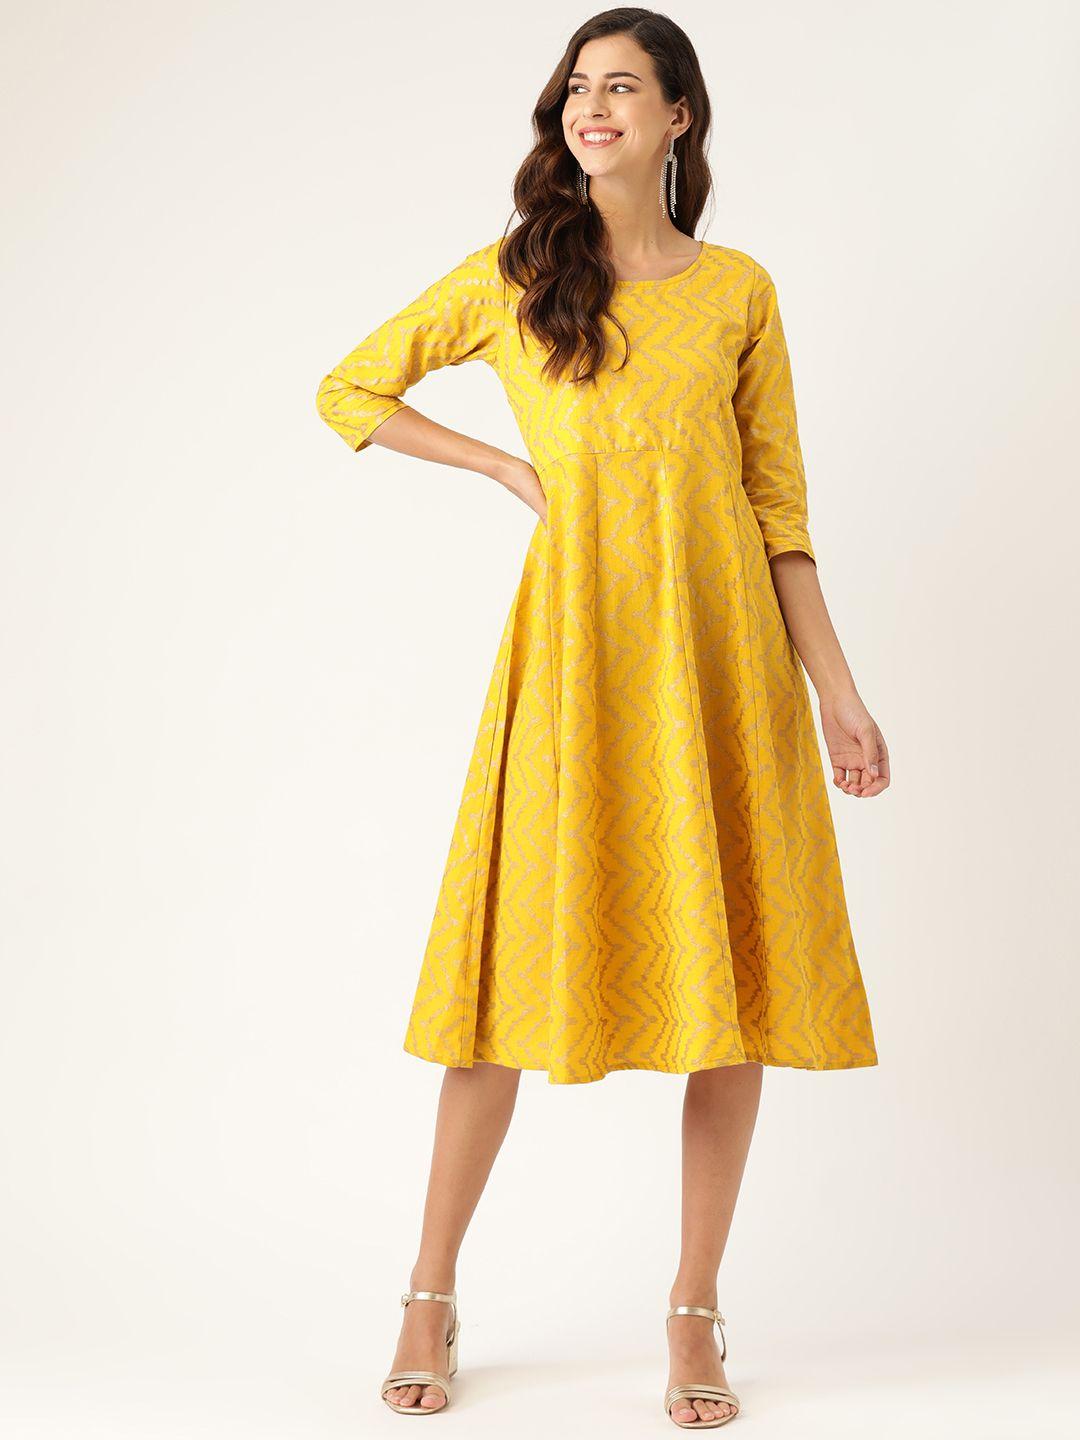 shae by sassafras yellow & beige chevron printed a-line midi dress